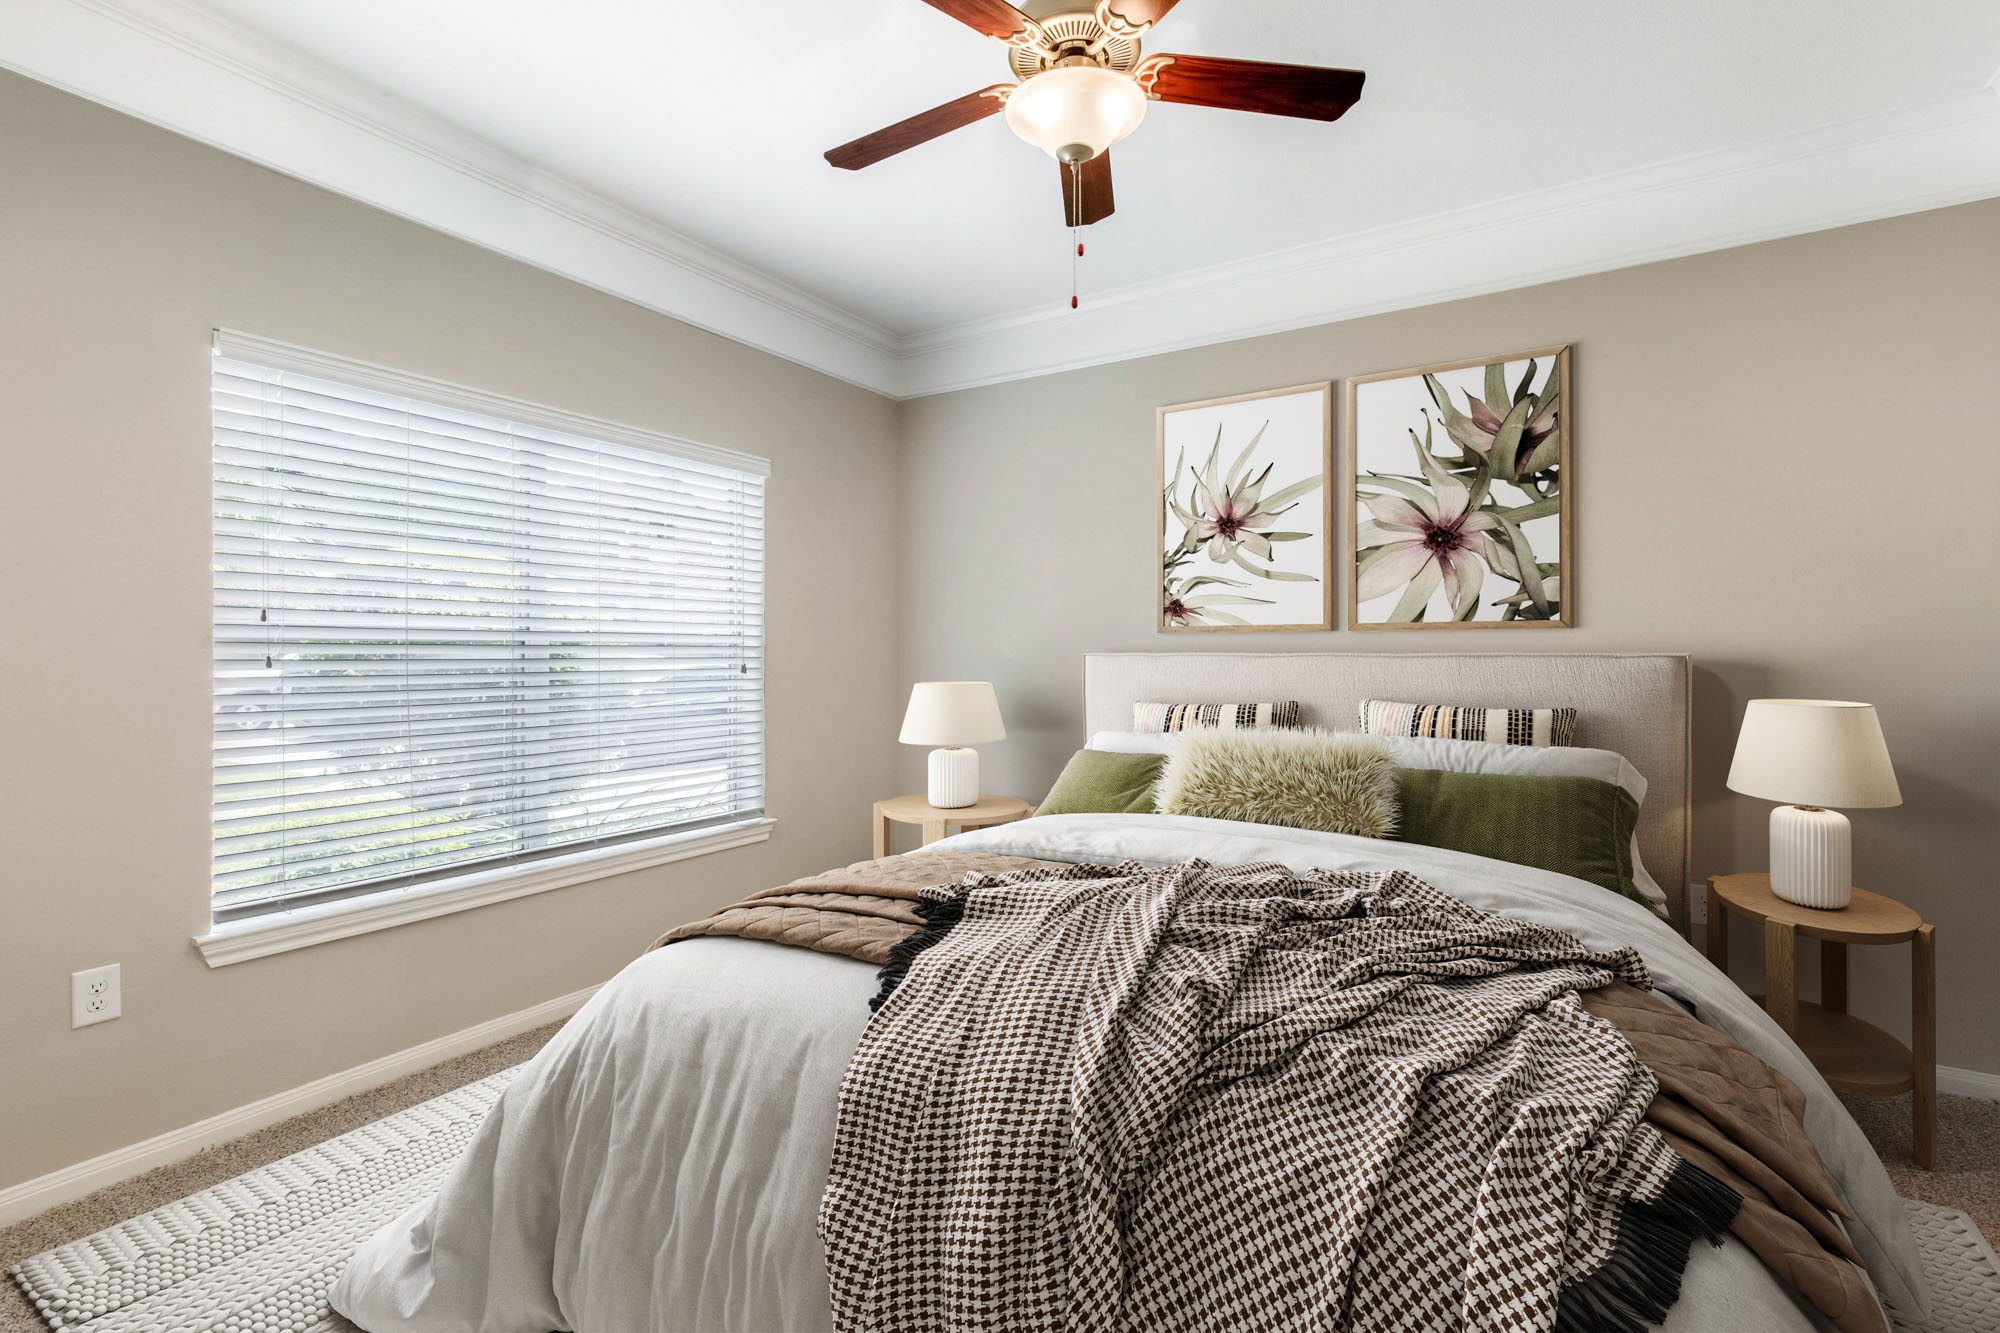 A bedroom at The Villas at Shadow Creek apartments in Houston, TX.